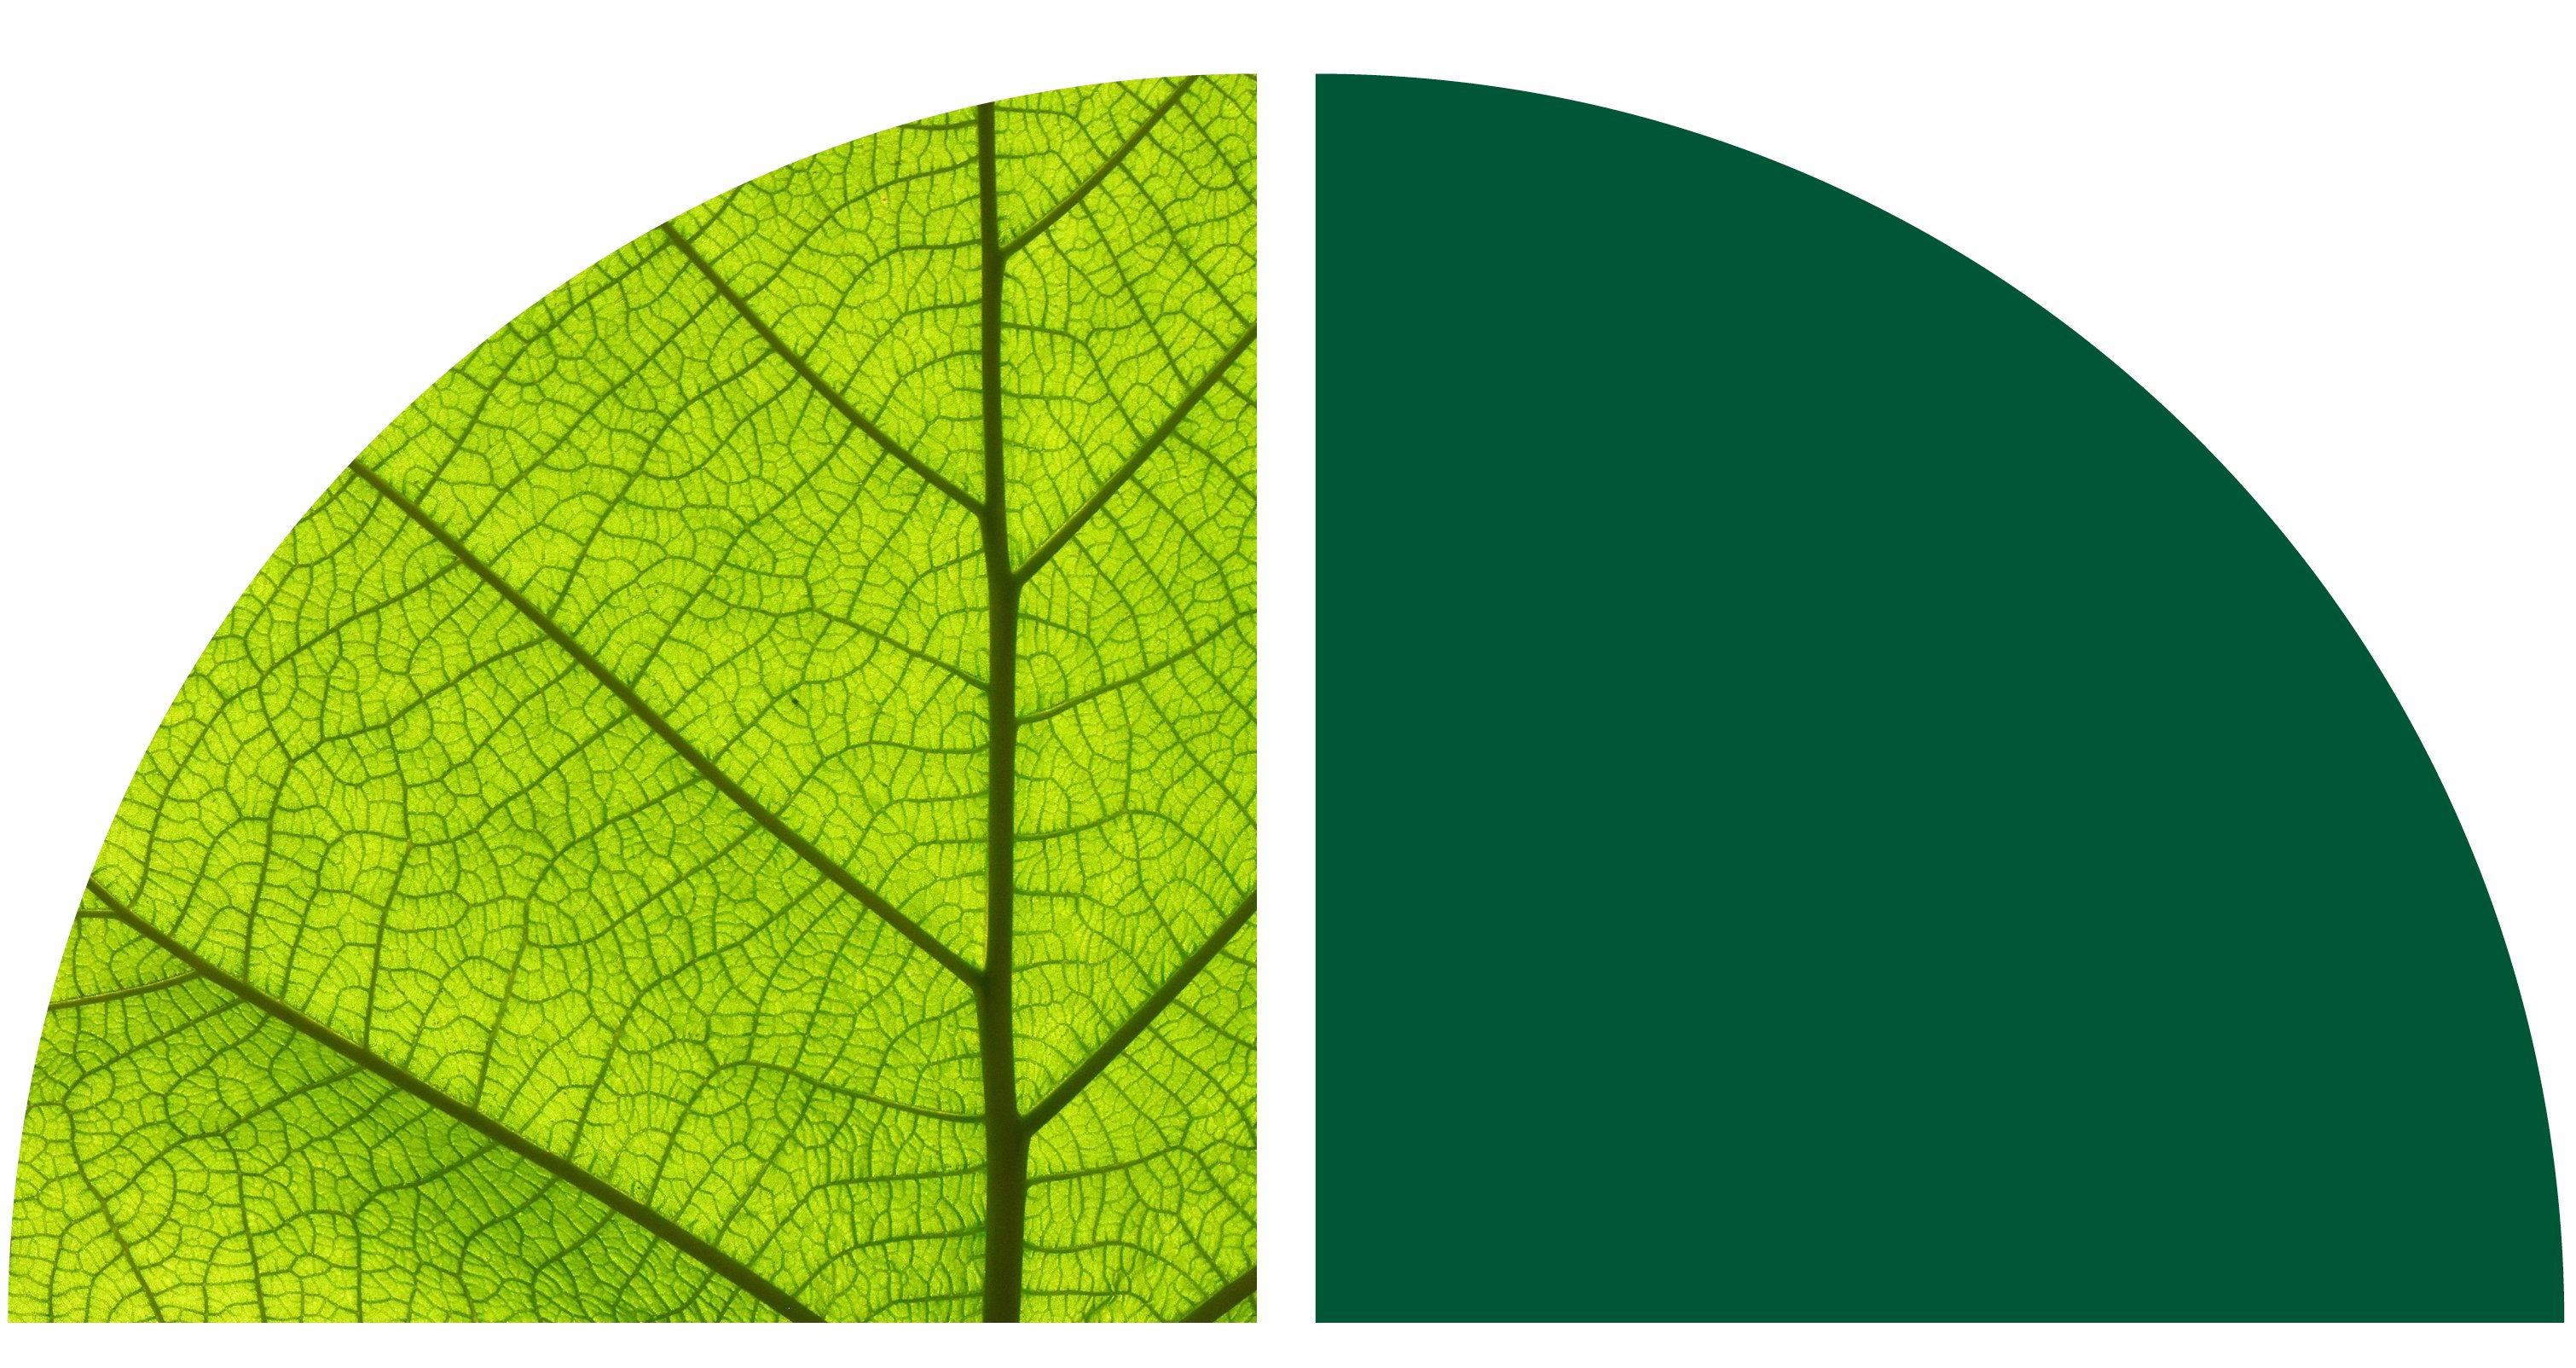 A green leaf.